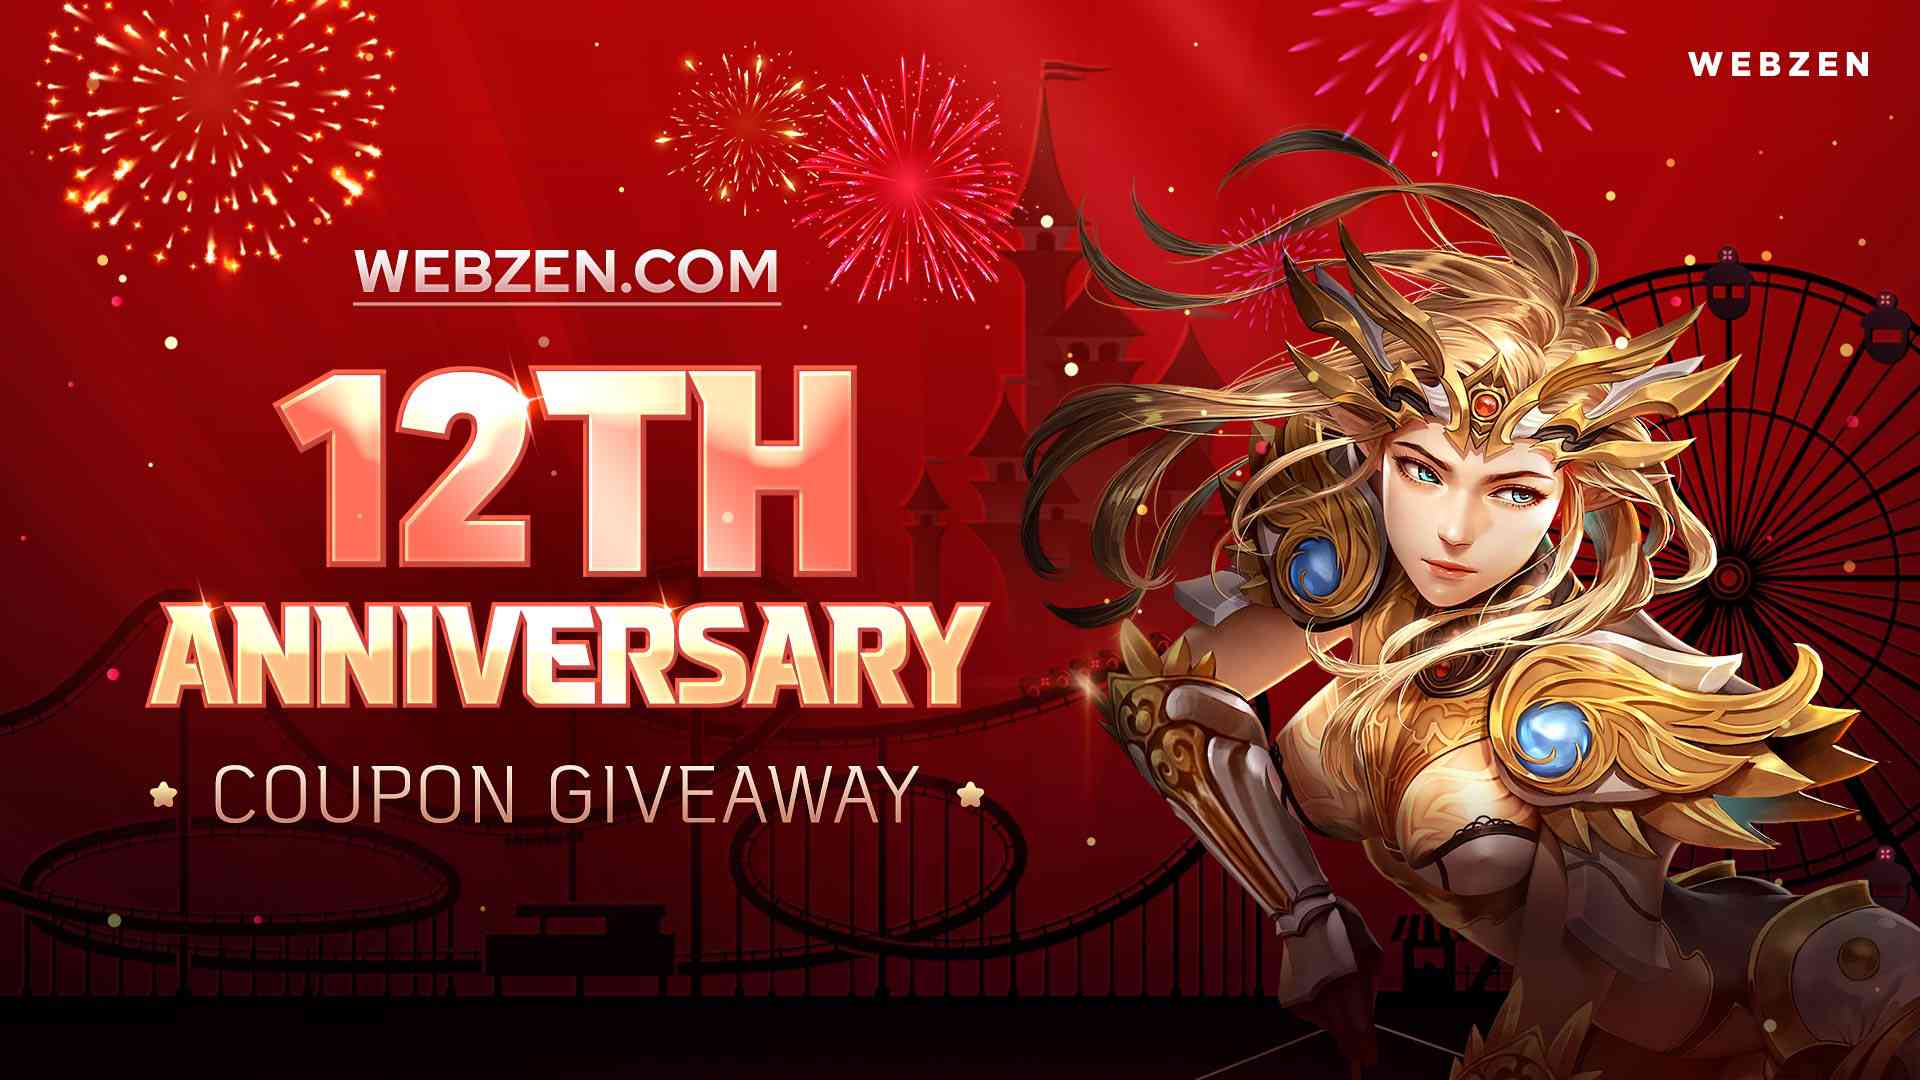 WEBZEN.COM’s 12th Anniversary Giveaway 15